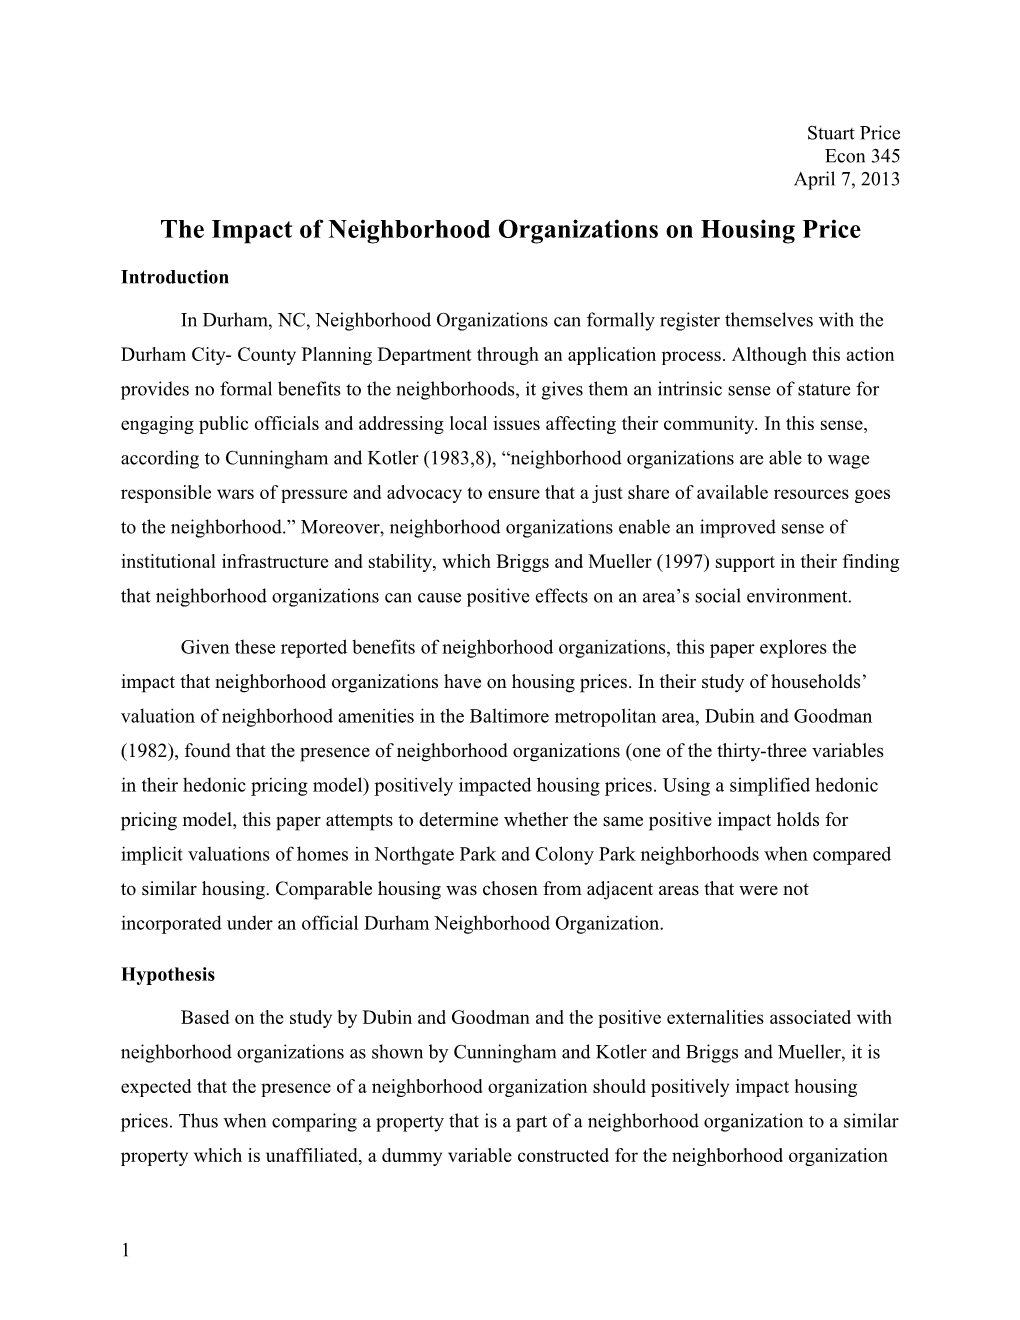 The Impact of Neighborhood Organizations on Housing Price